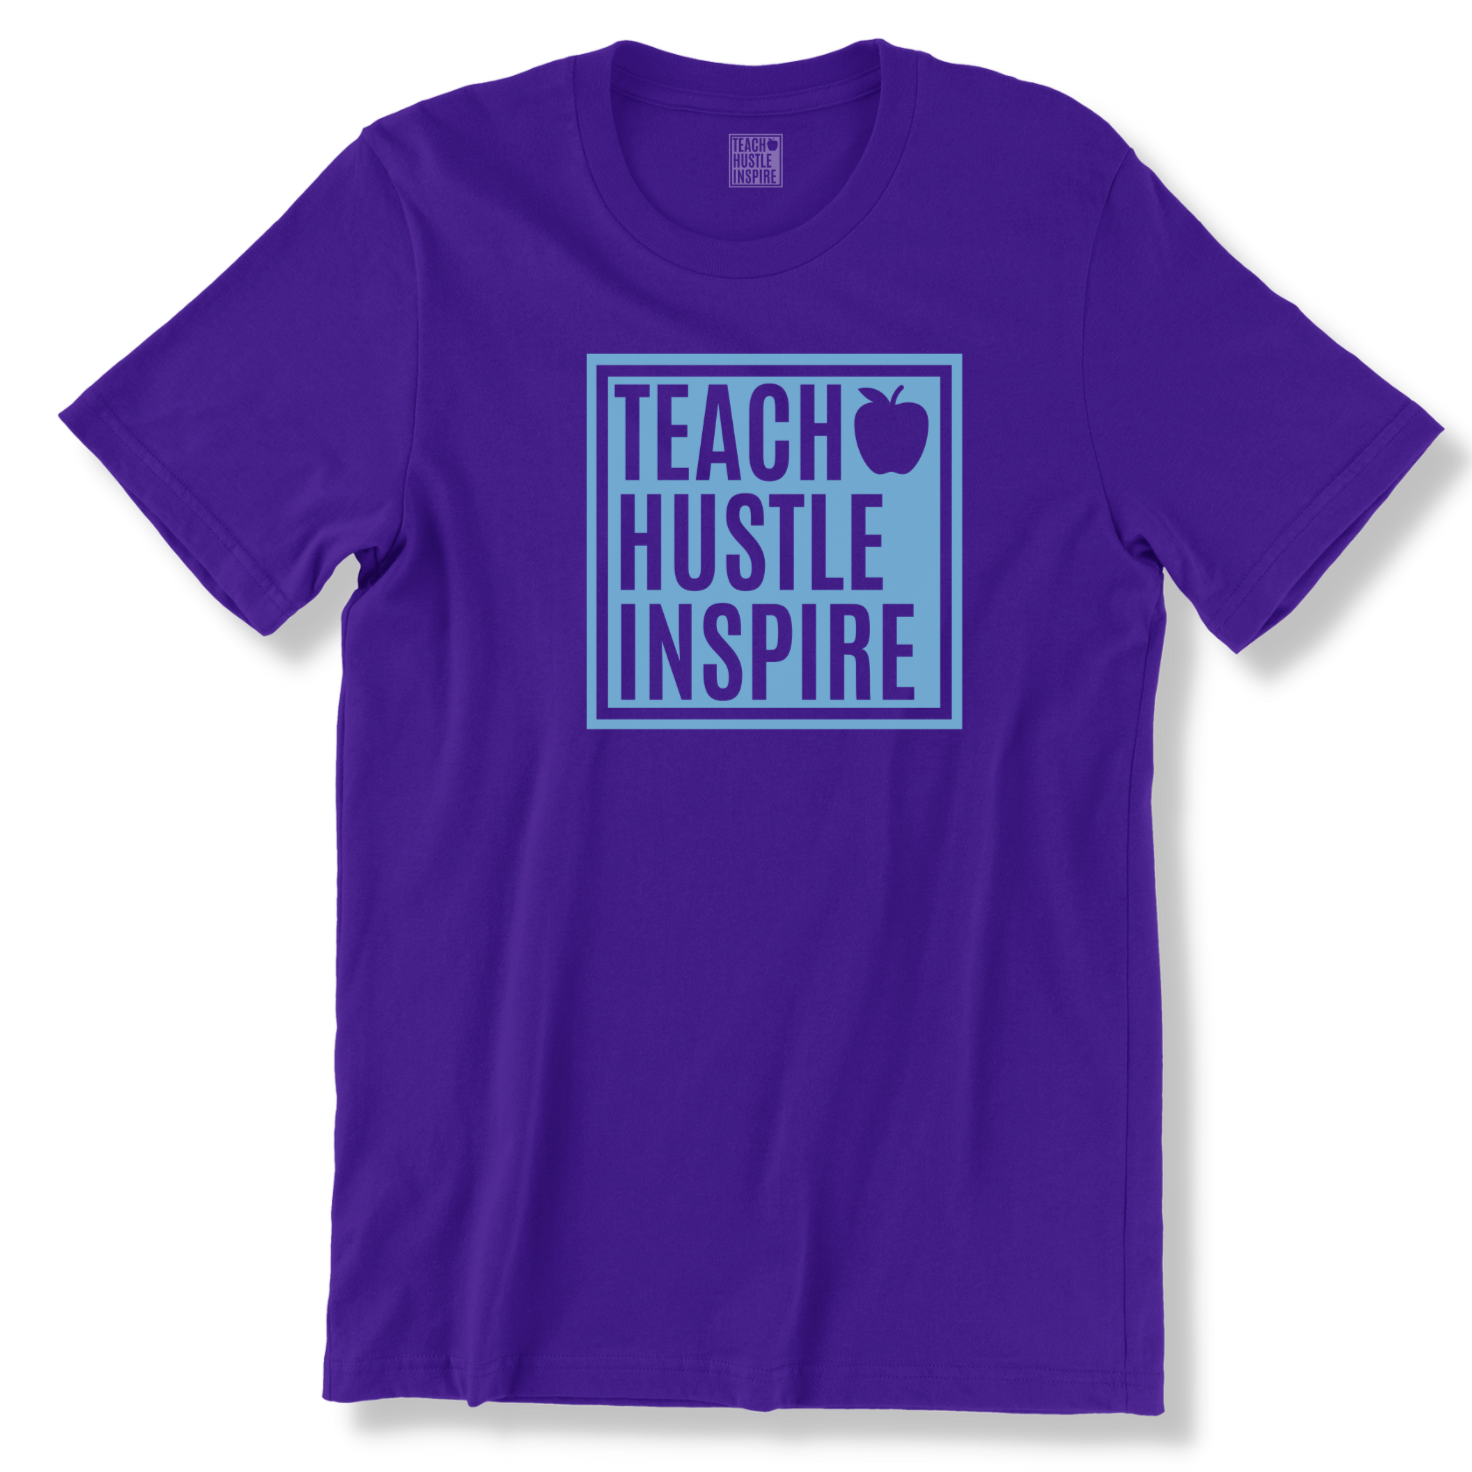 Teach Hustle Inspire - PURPLE RAIN